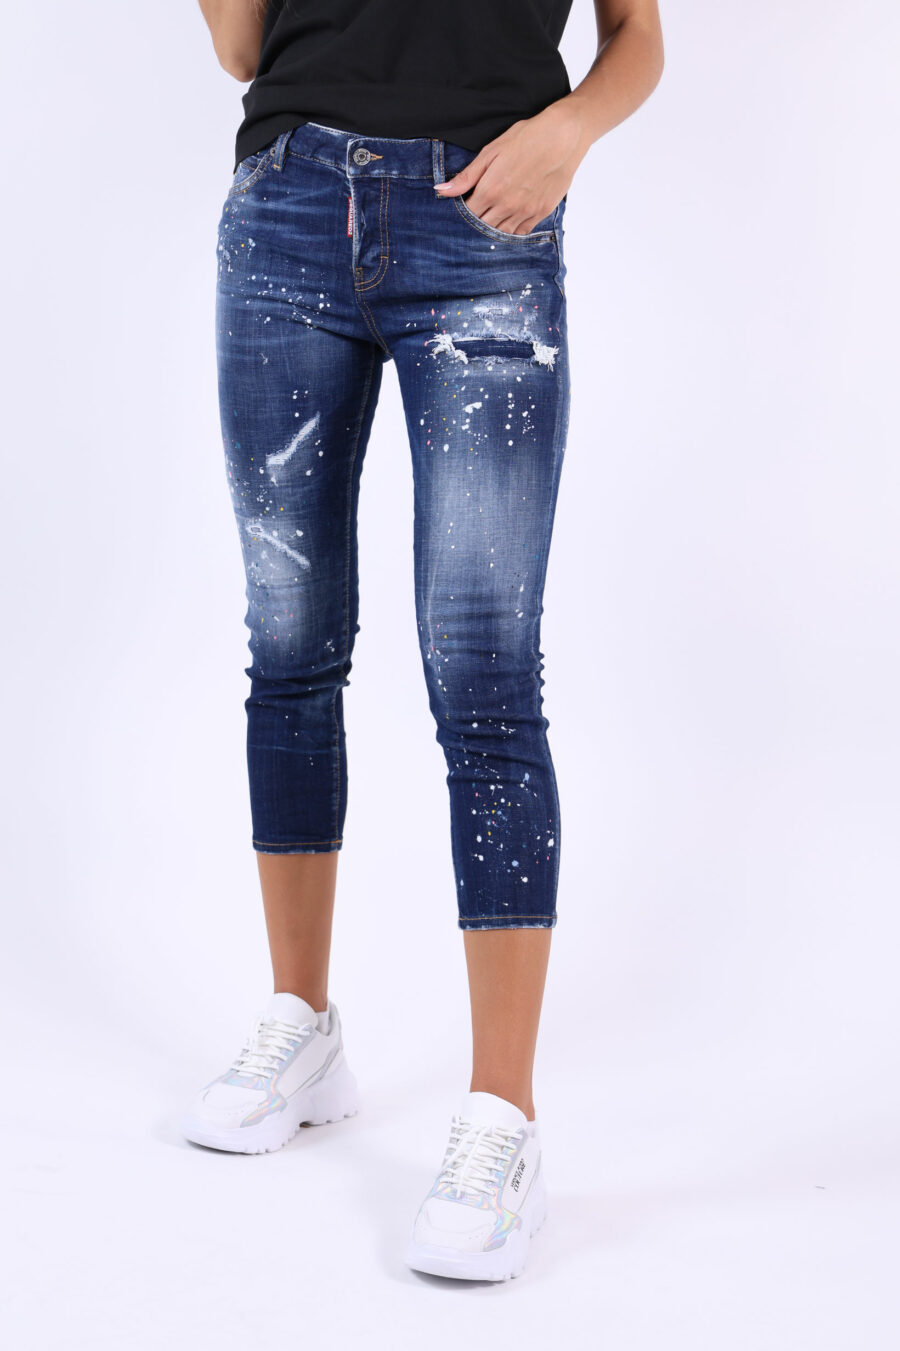 Cool girl cropped jean trousers "Cool girl cropped jean" blau mit Rissen getragen - 361223054662202024